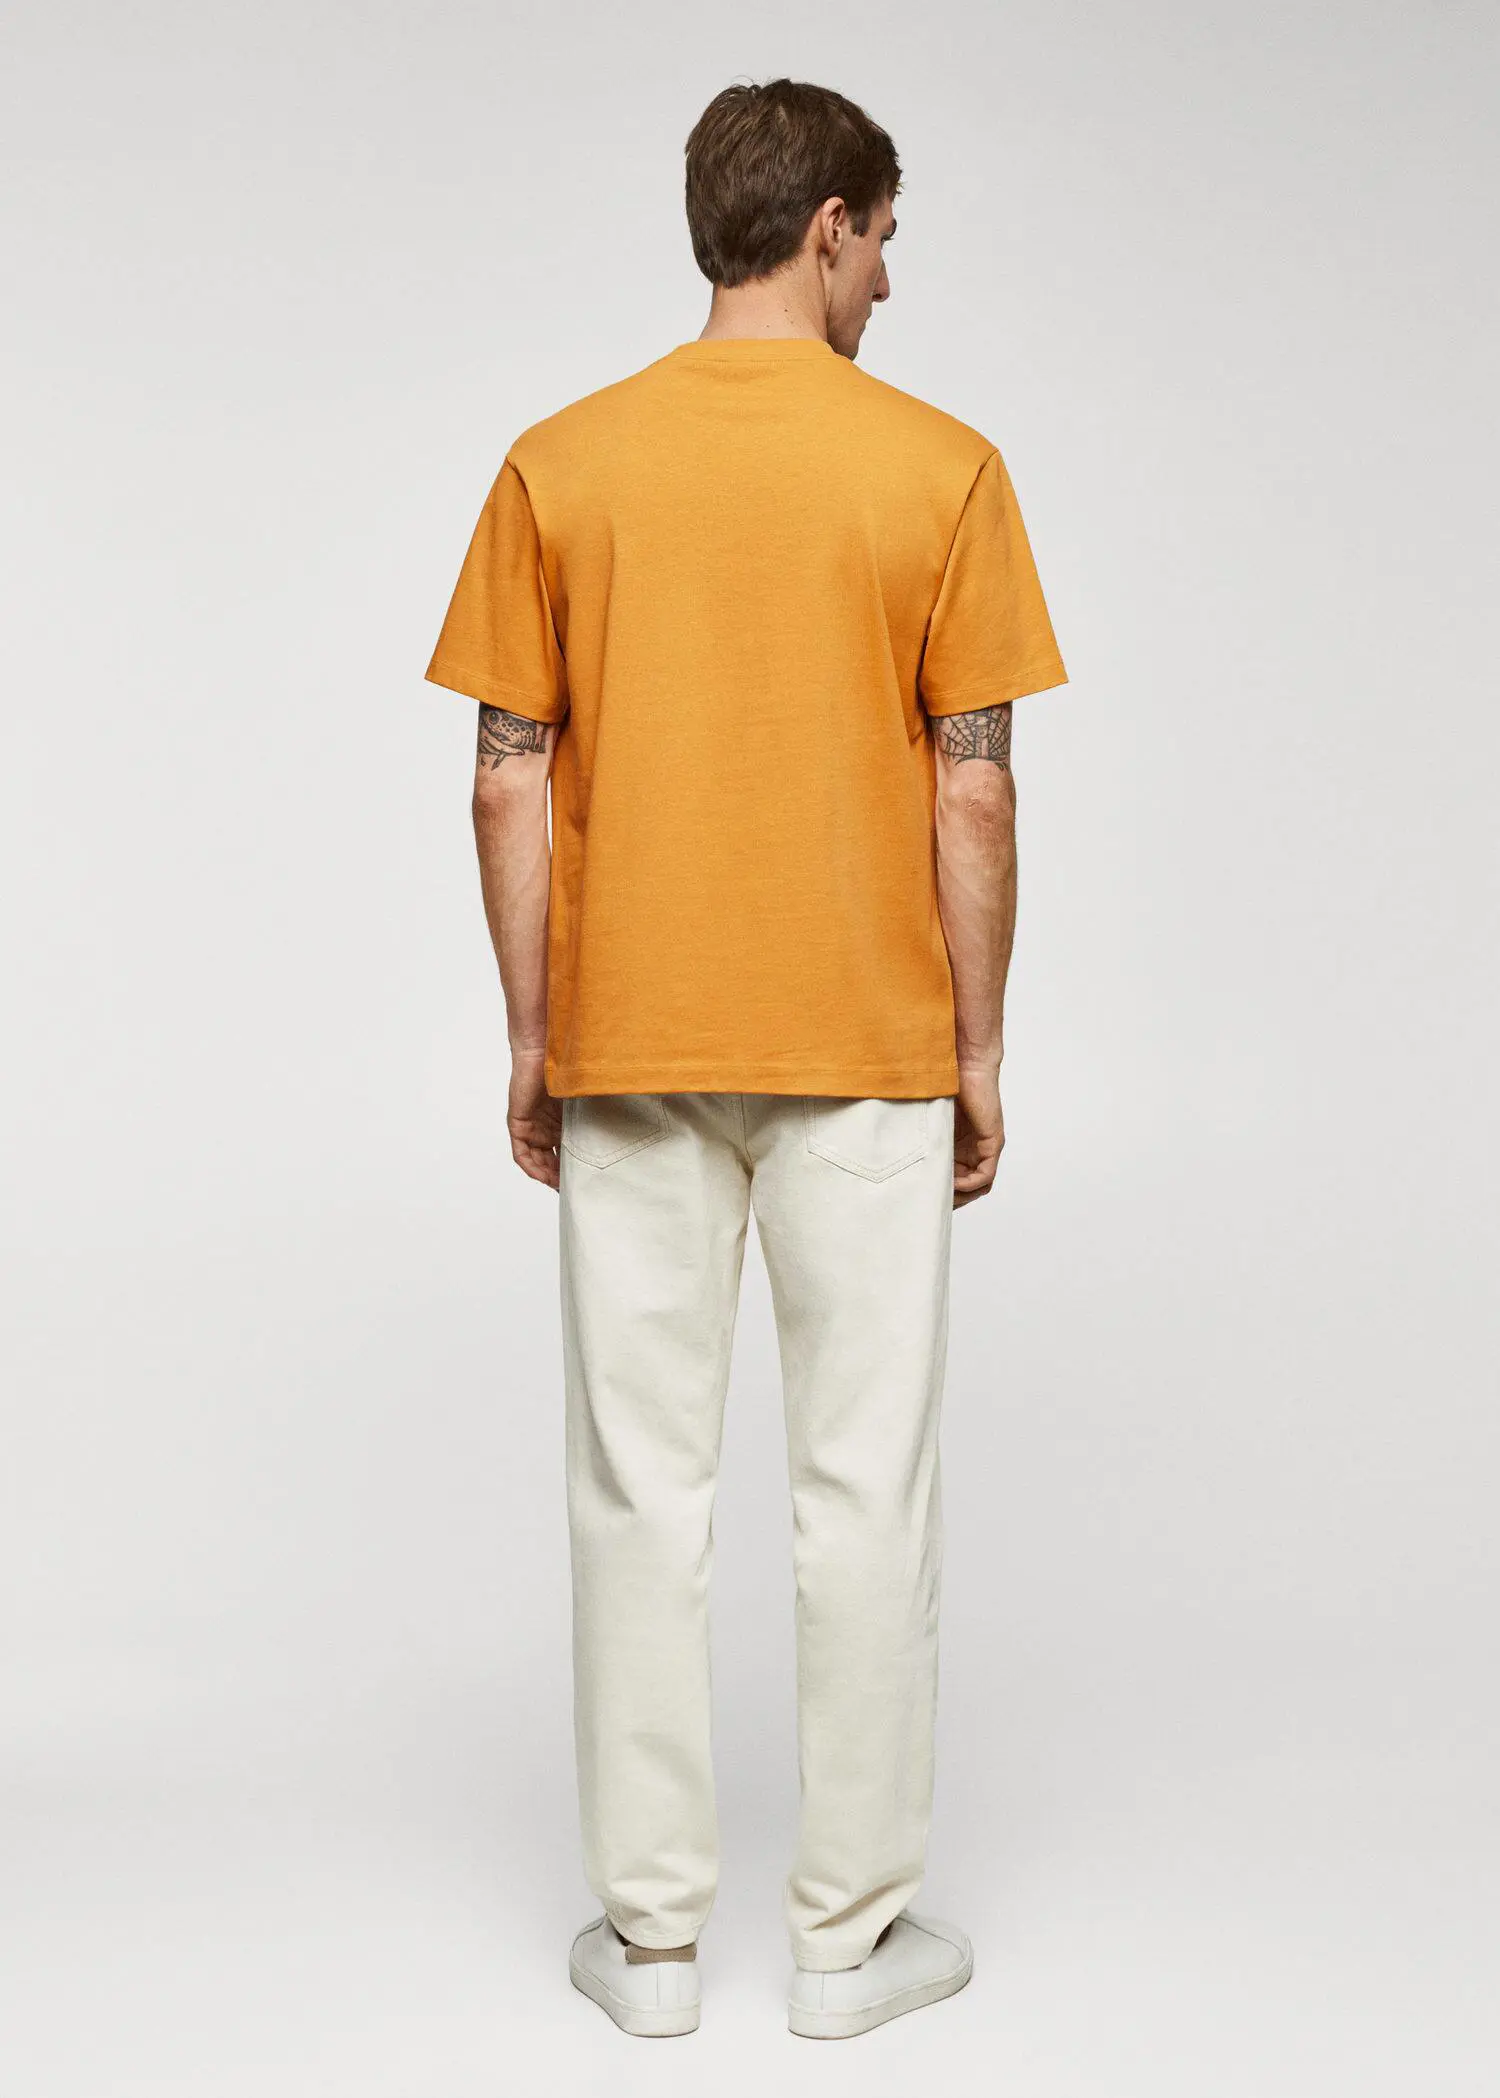 Mango 100% cotton printed t-shirt. 3